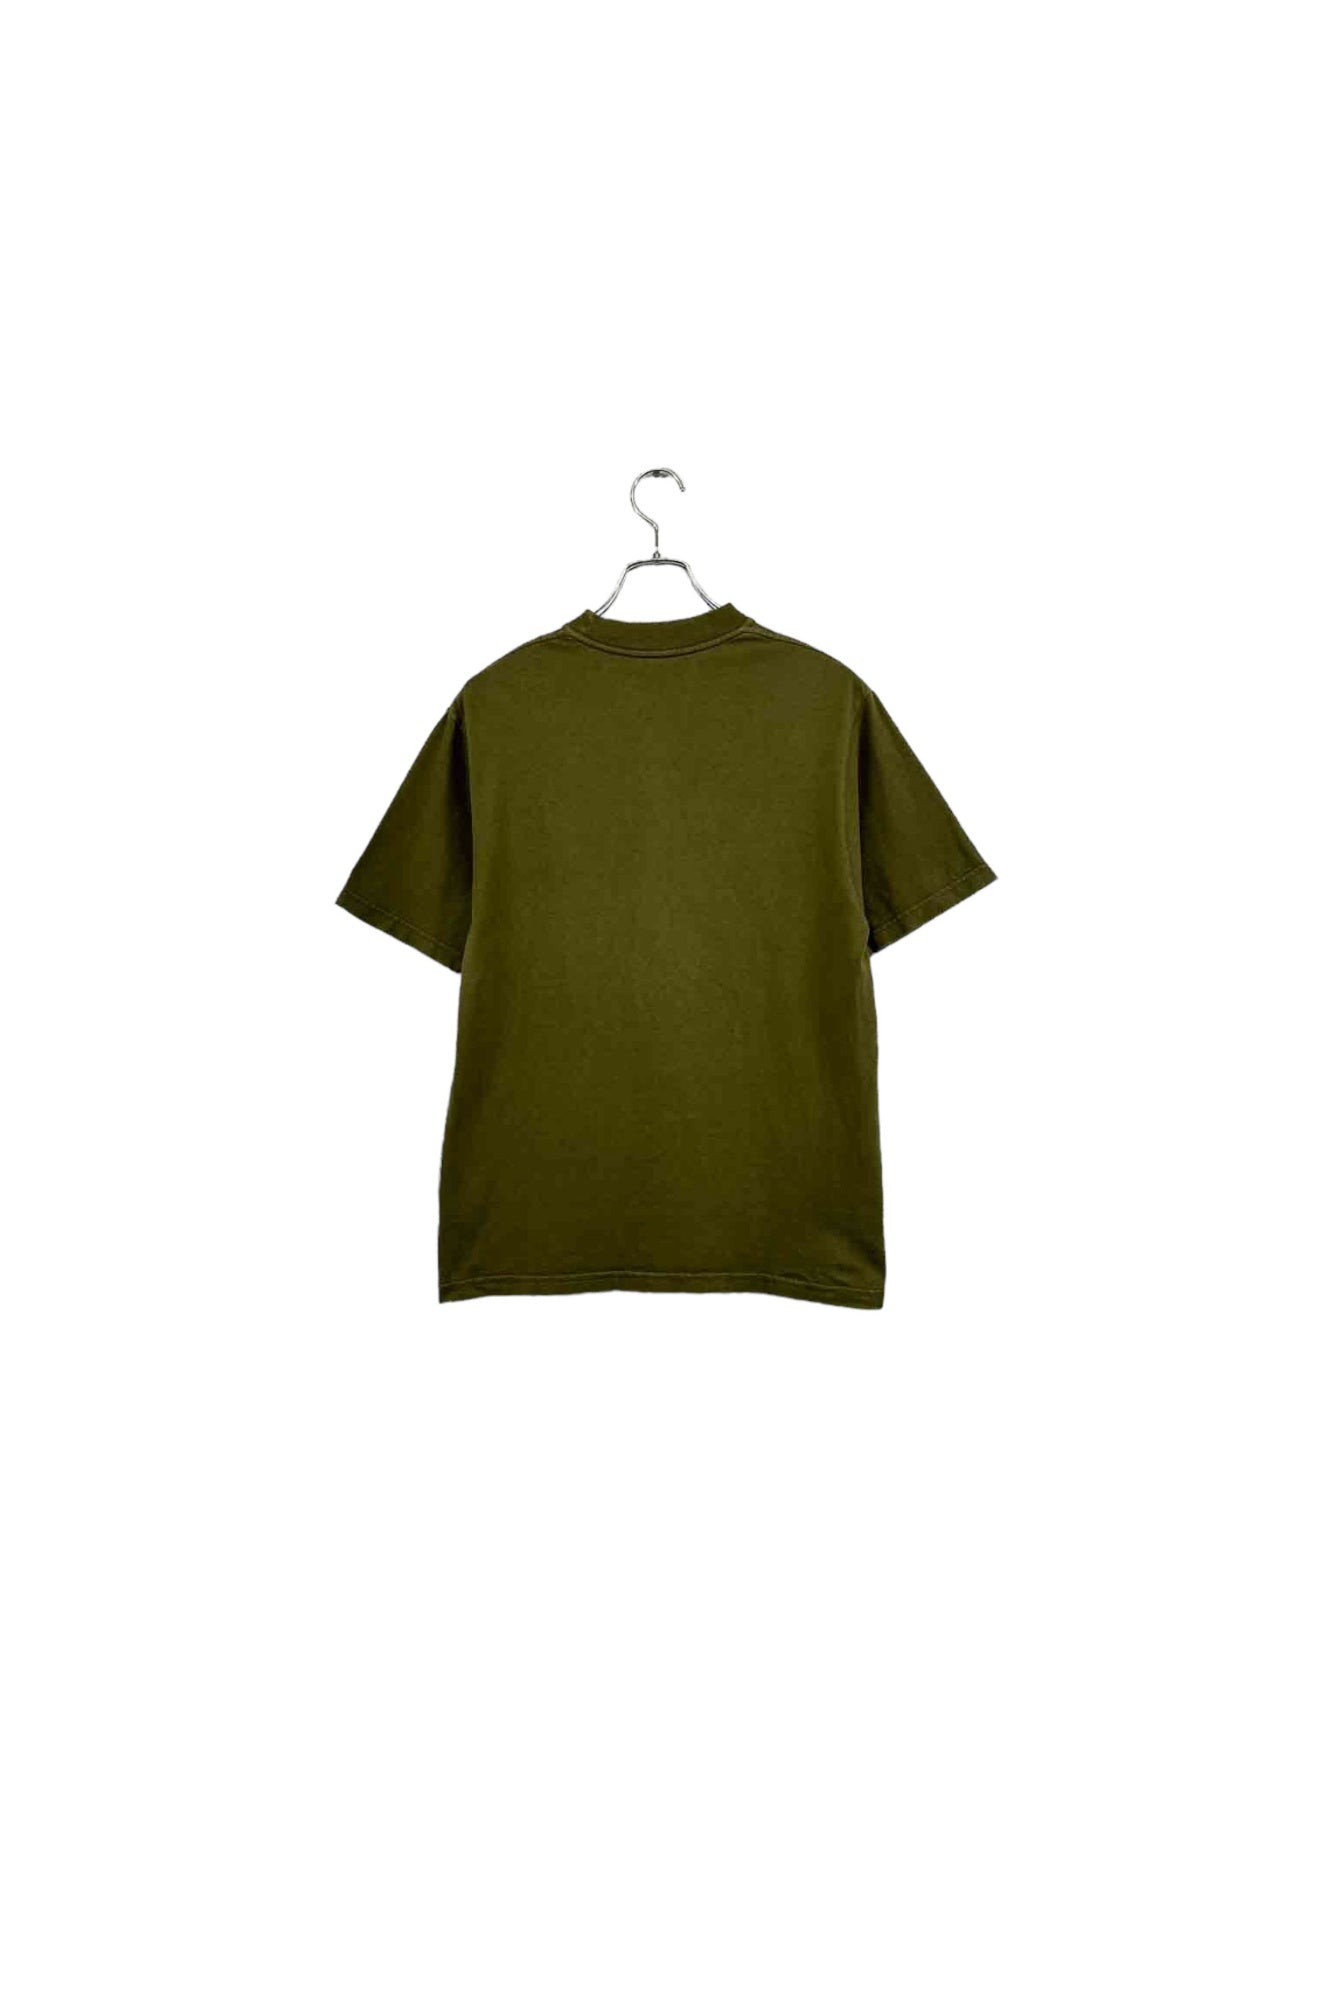 Made in USA BUZZ RICKSON green T-shirt